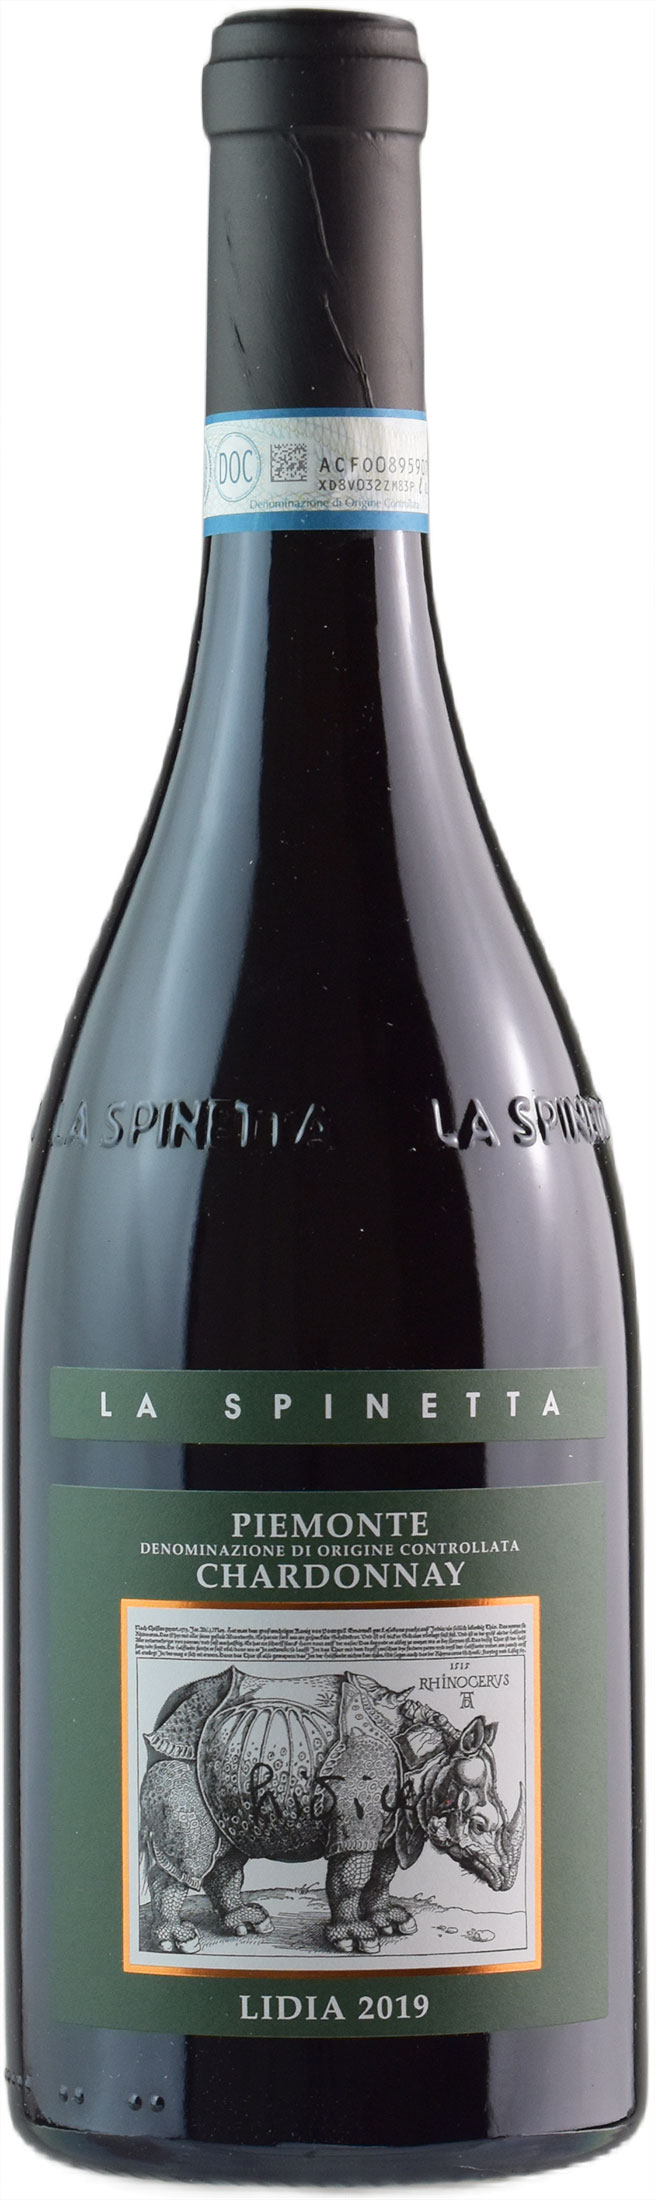 La Spinetta Langhe Chardonnay Lidia 2019